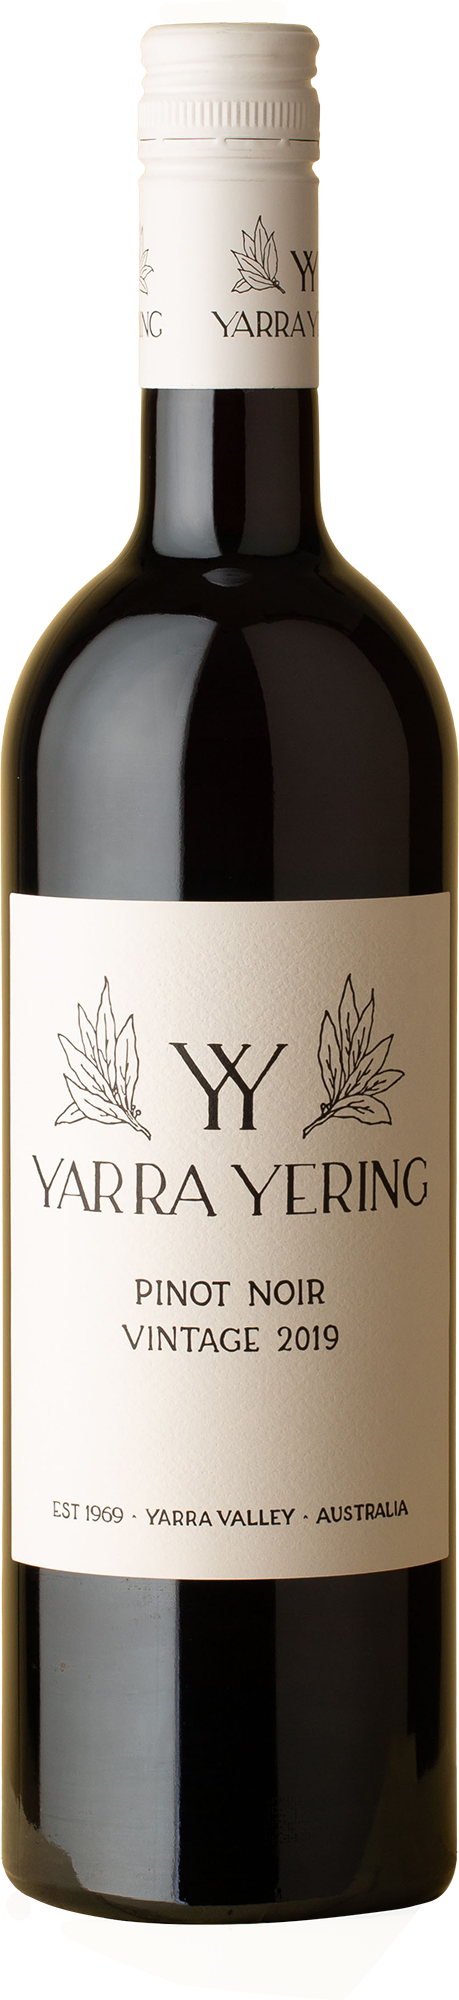 Yarra Yering -  Pinot Noir 2019